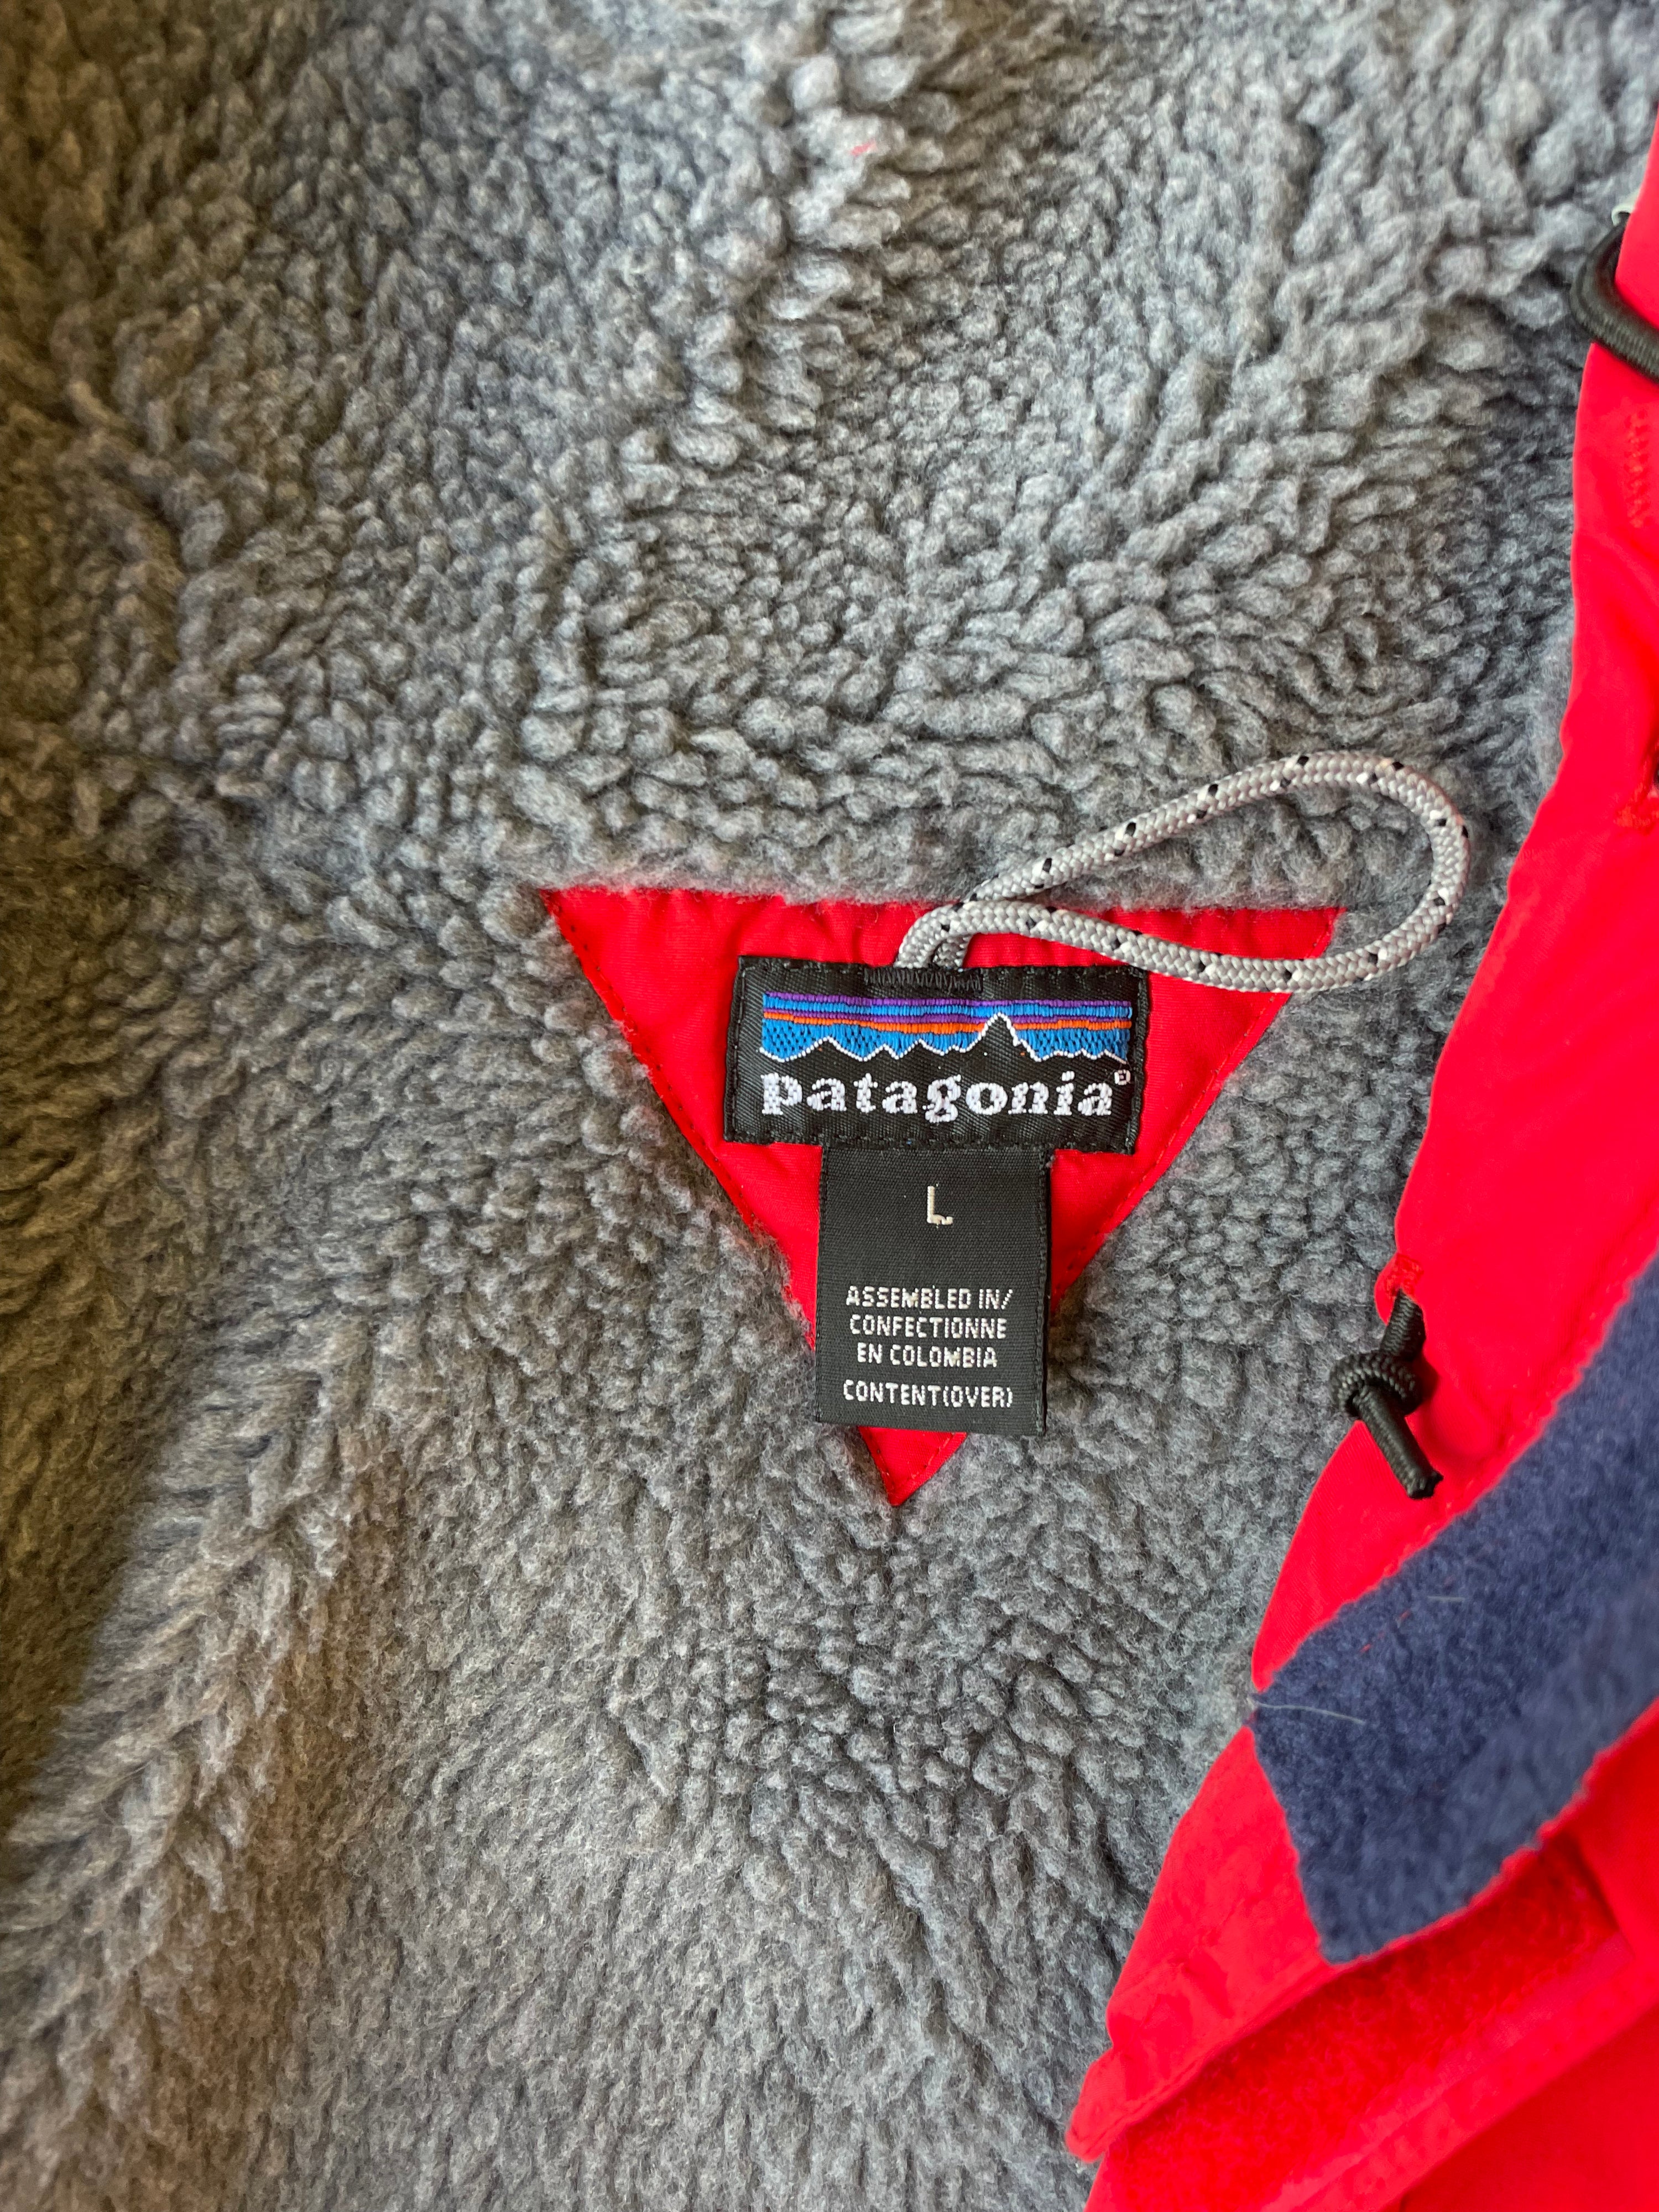 Patagonia Fleece Lined Jacket - Large